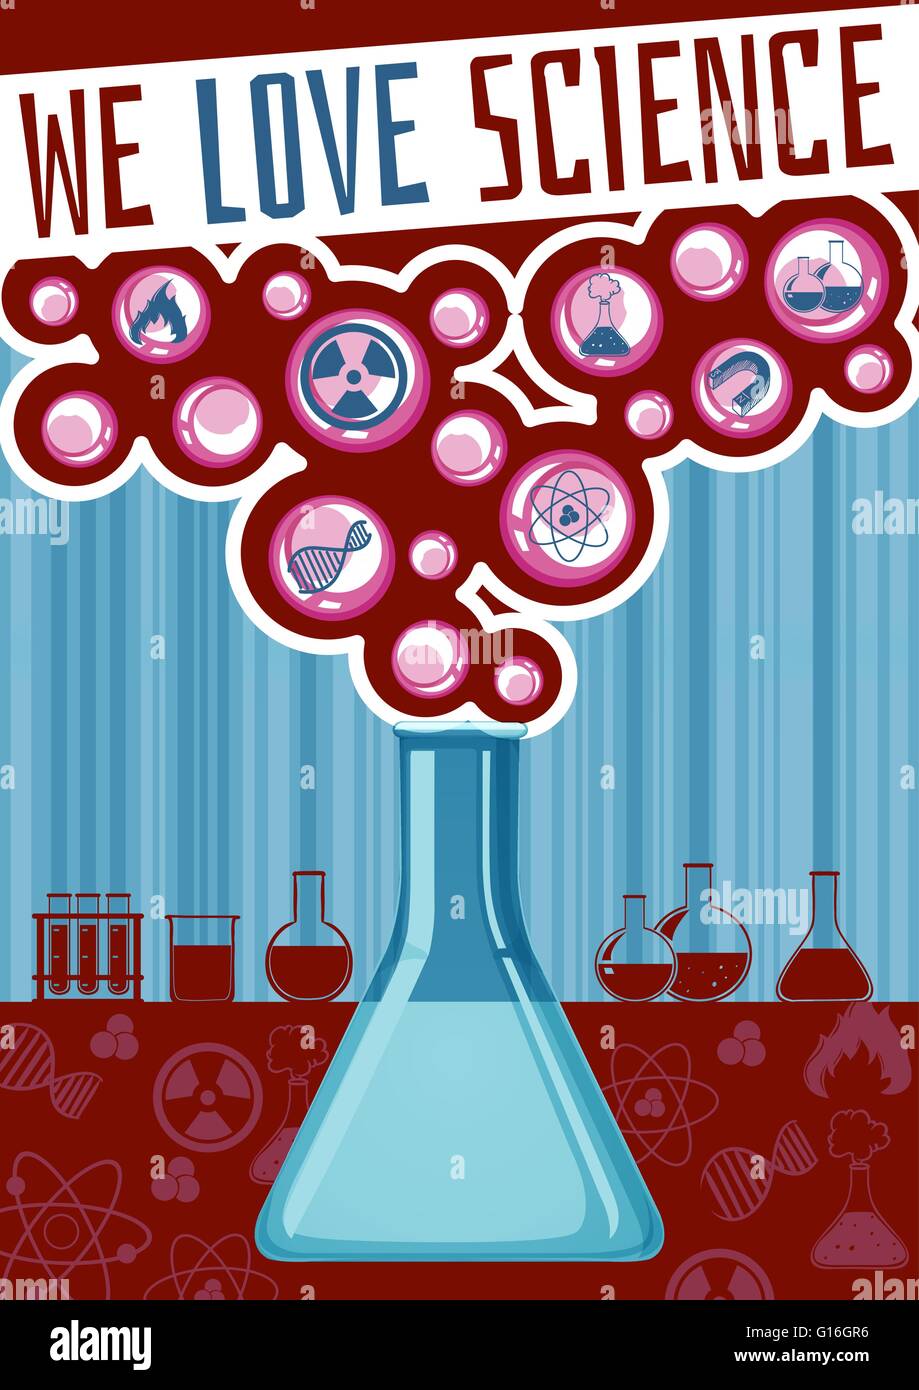 We love science poster illustration Image & Art -